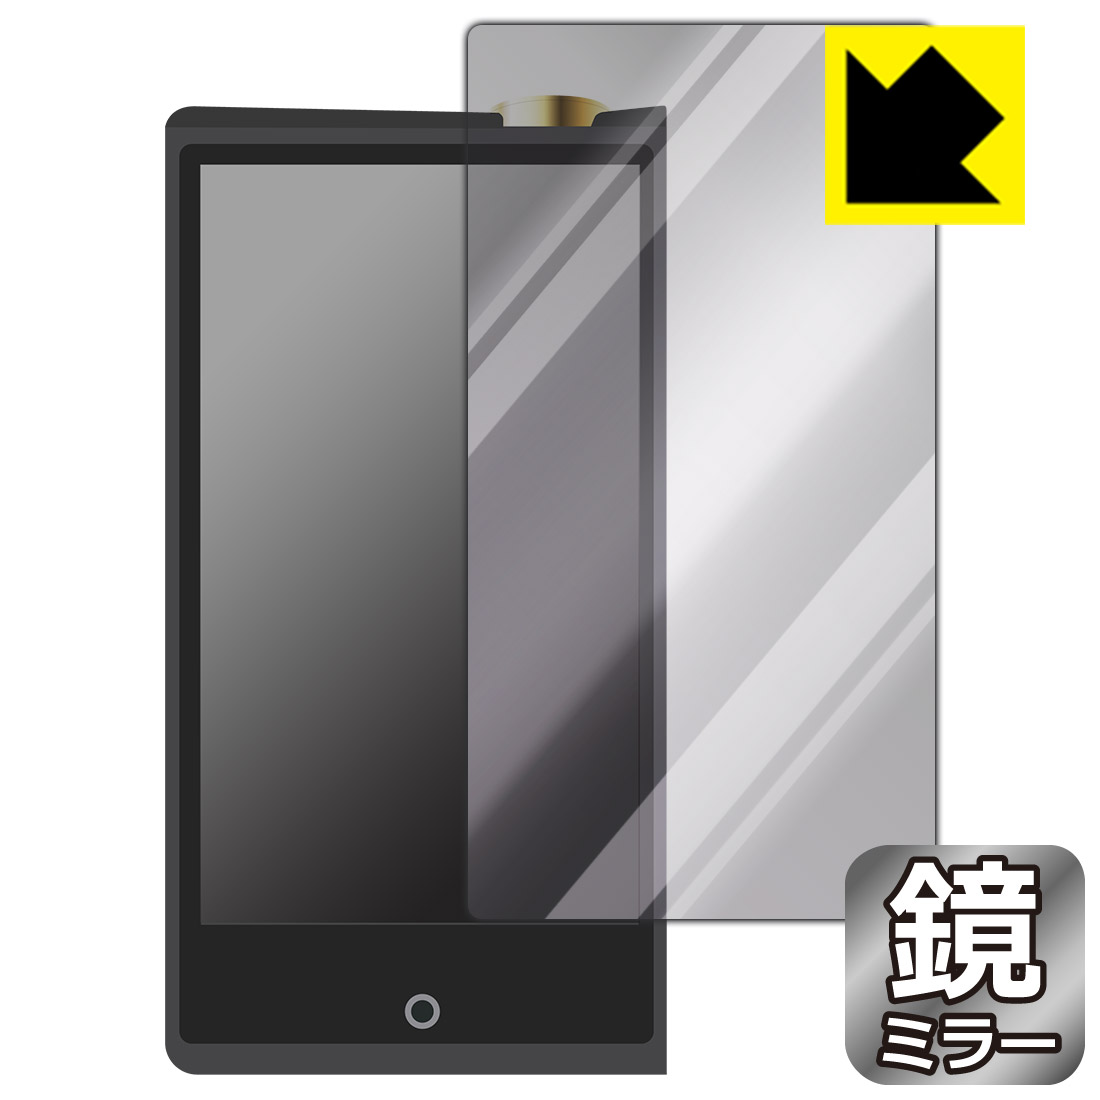 Mirror Shield 保護フィルム Cayin N8ii (前面のみ) 日本製 自社製造直販